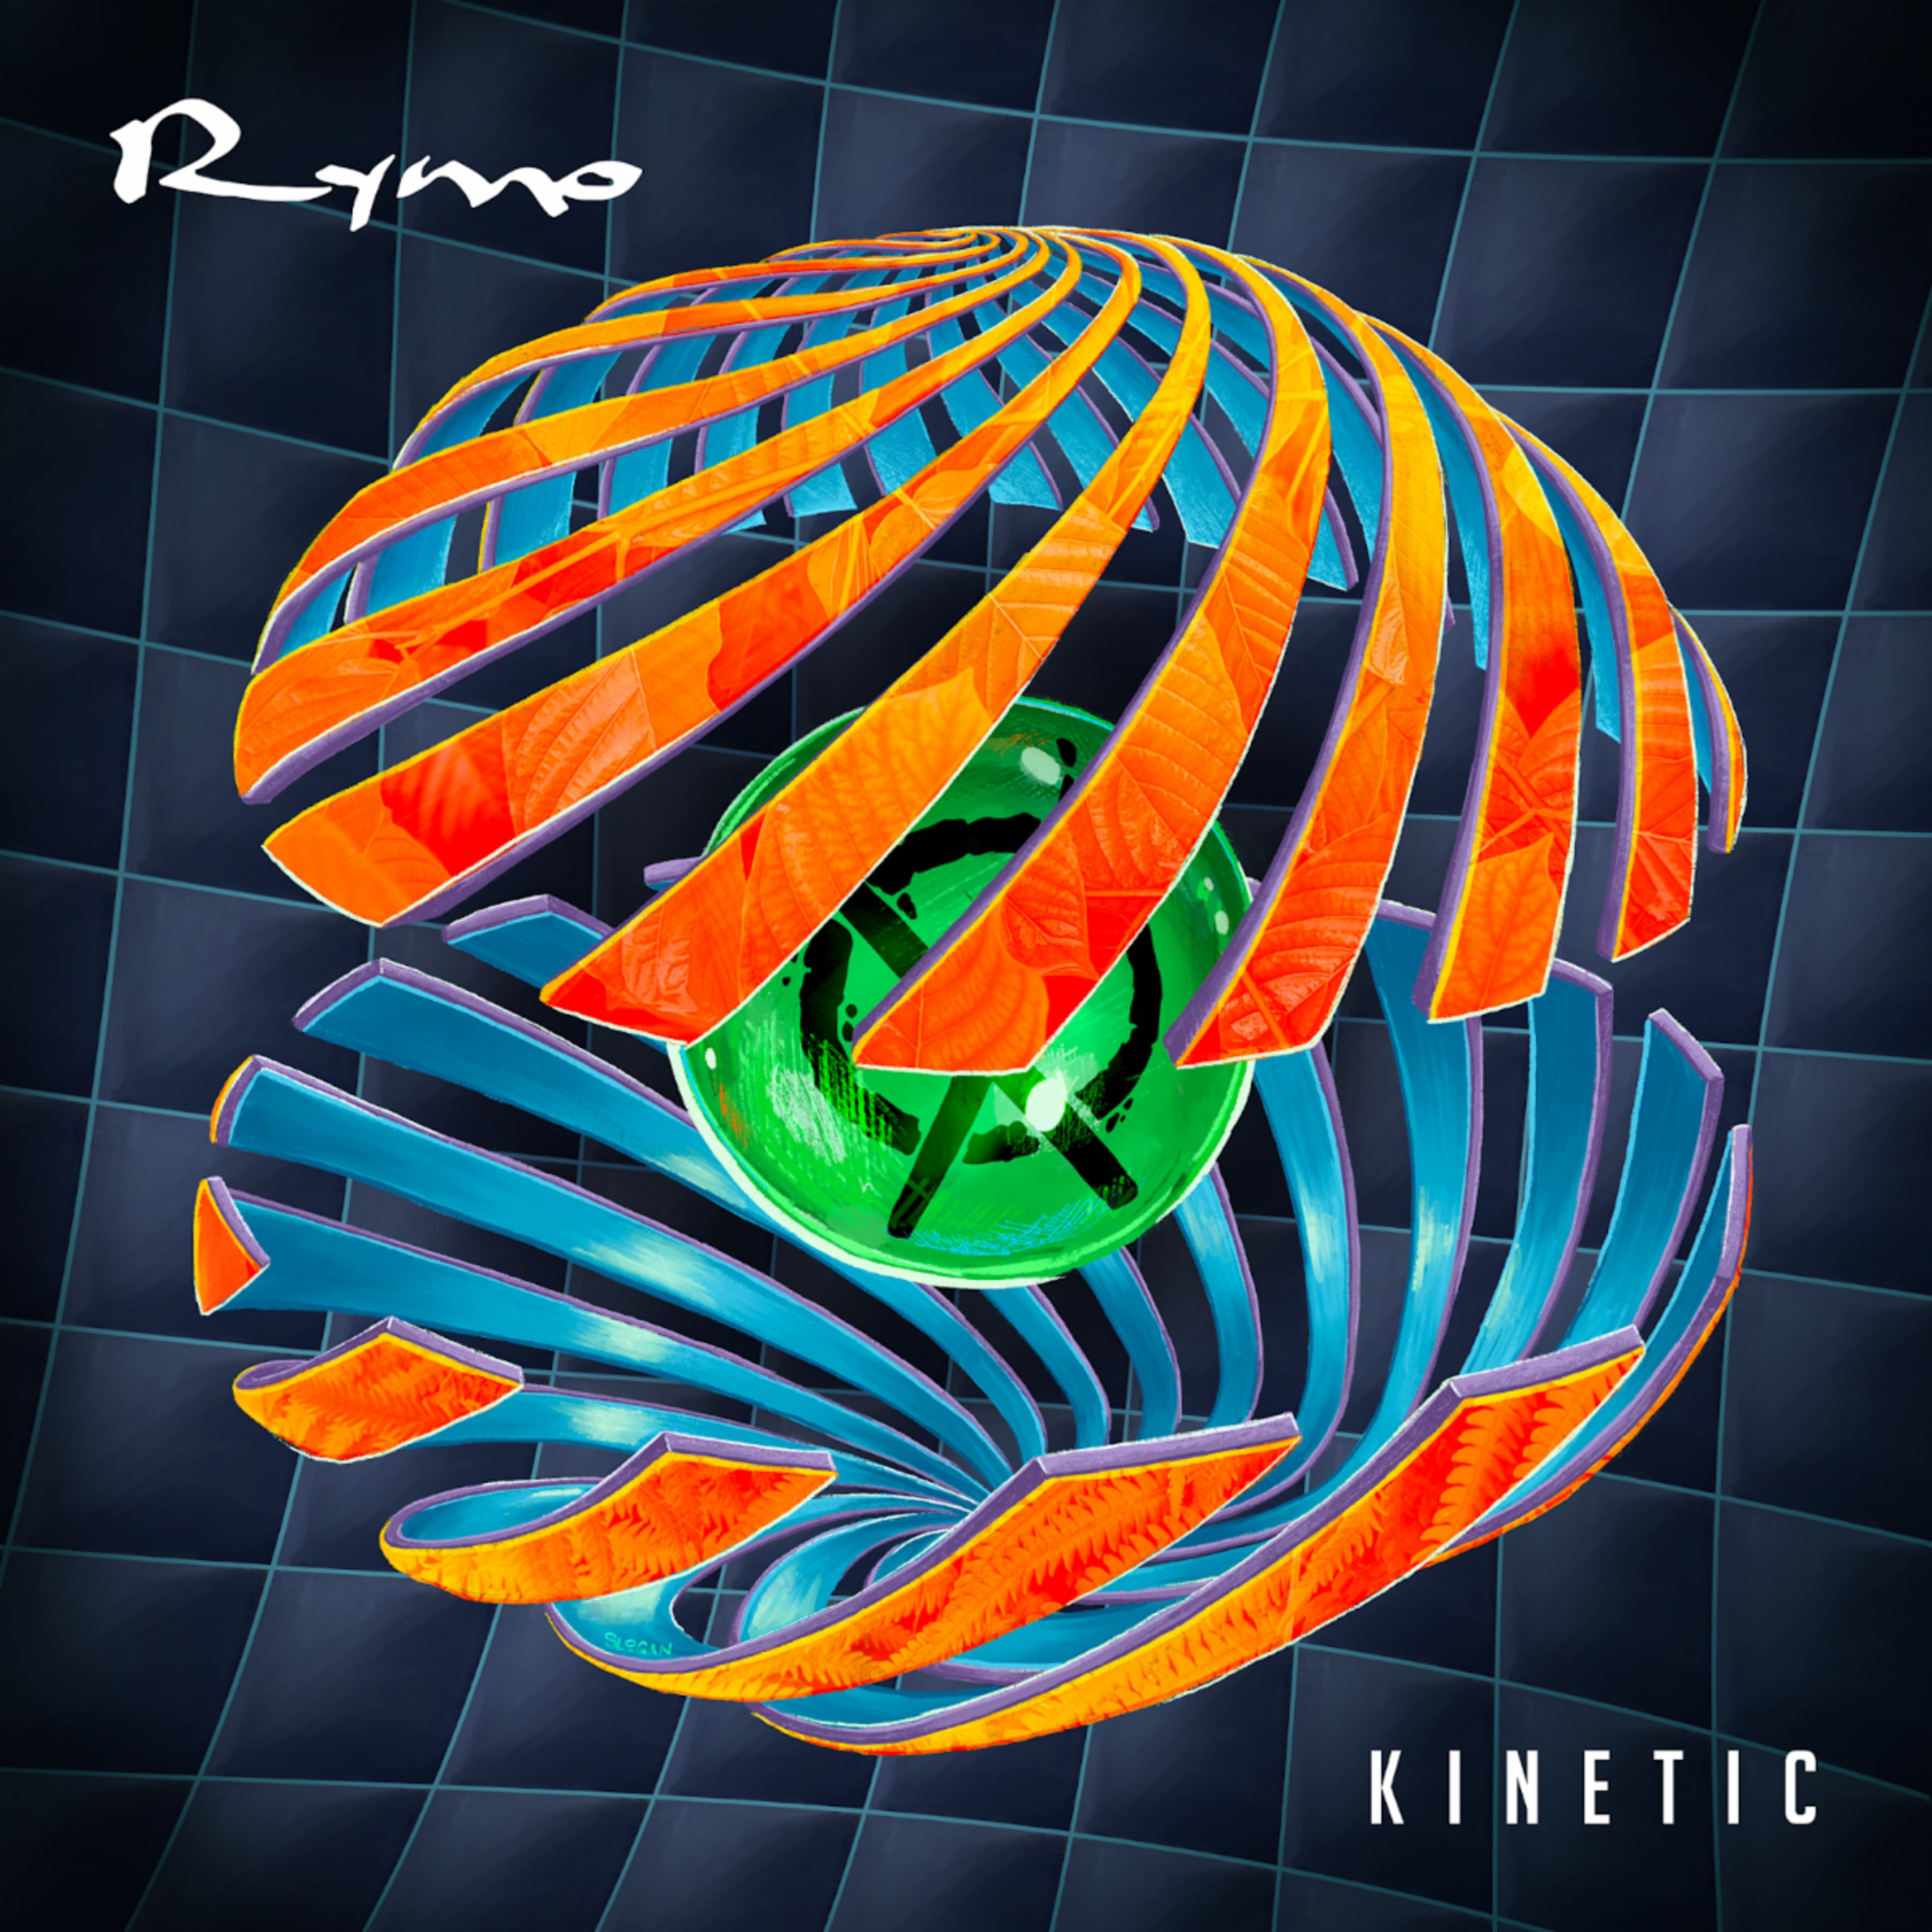 Slightly Stoopid’s Drummer RYMO Releases New Solo Album 'Kinetic'